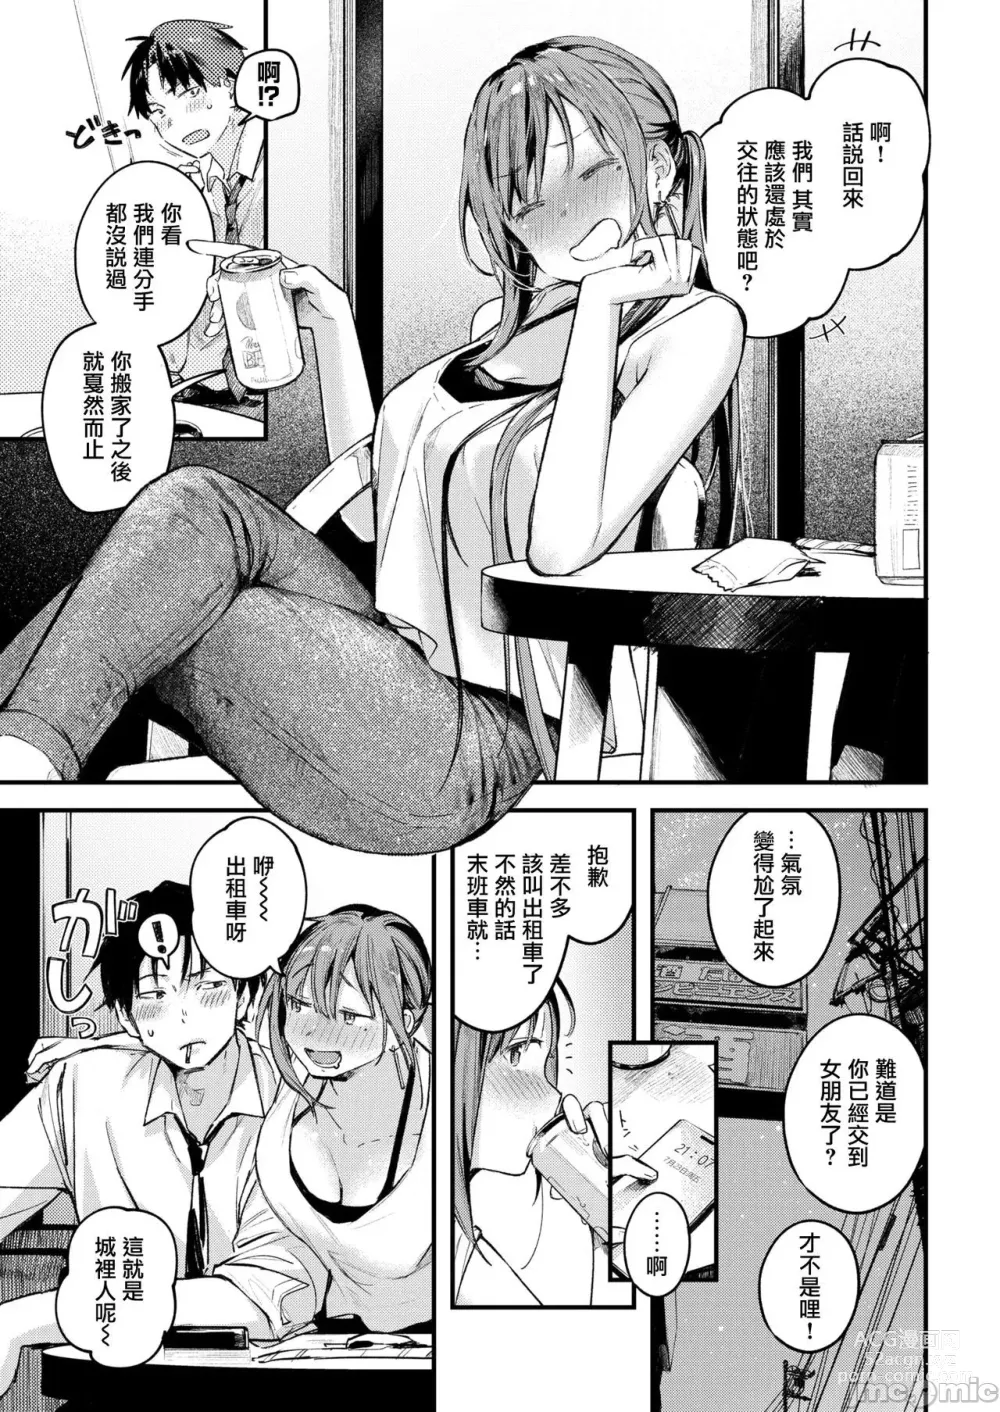 Page 7 of manga 像過去一樣